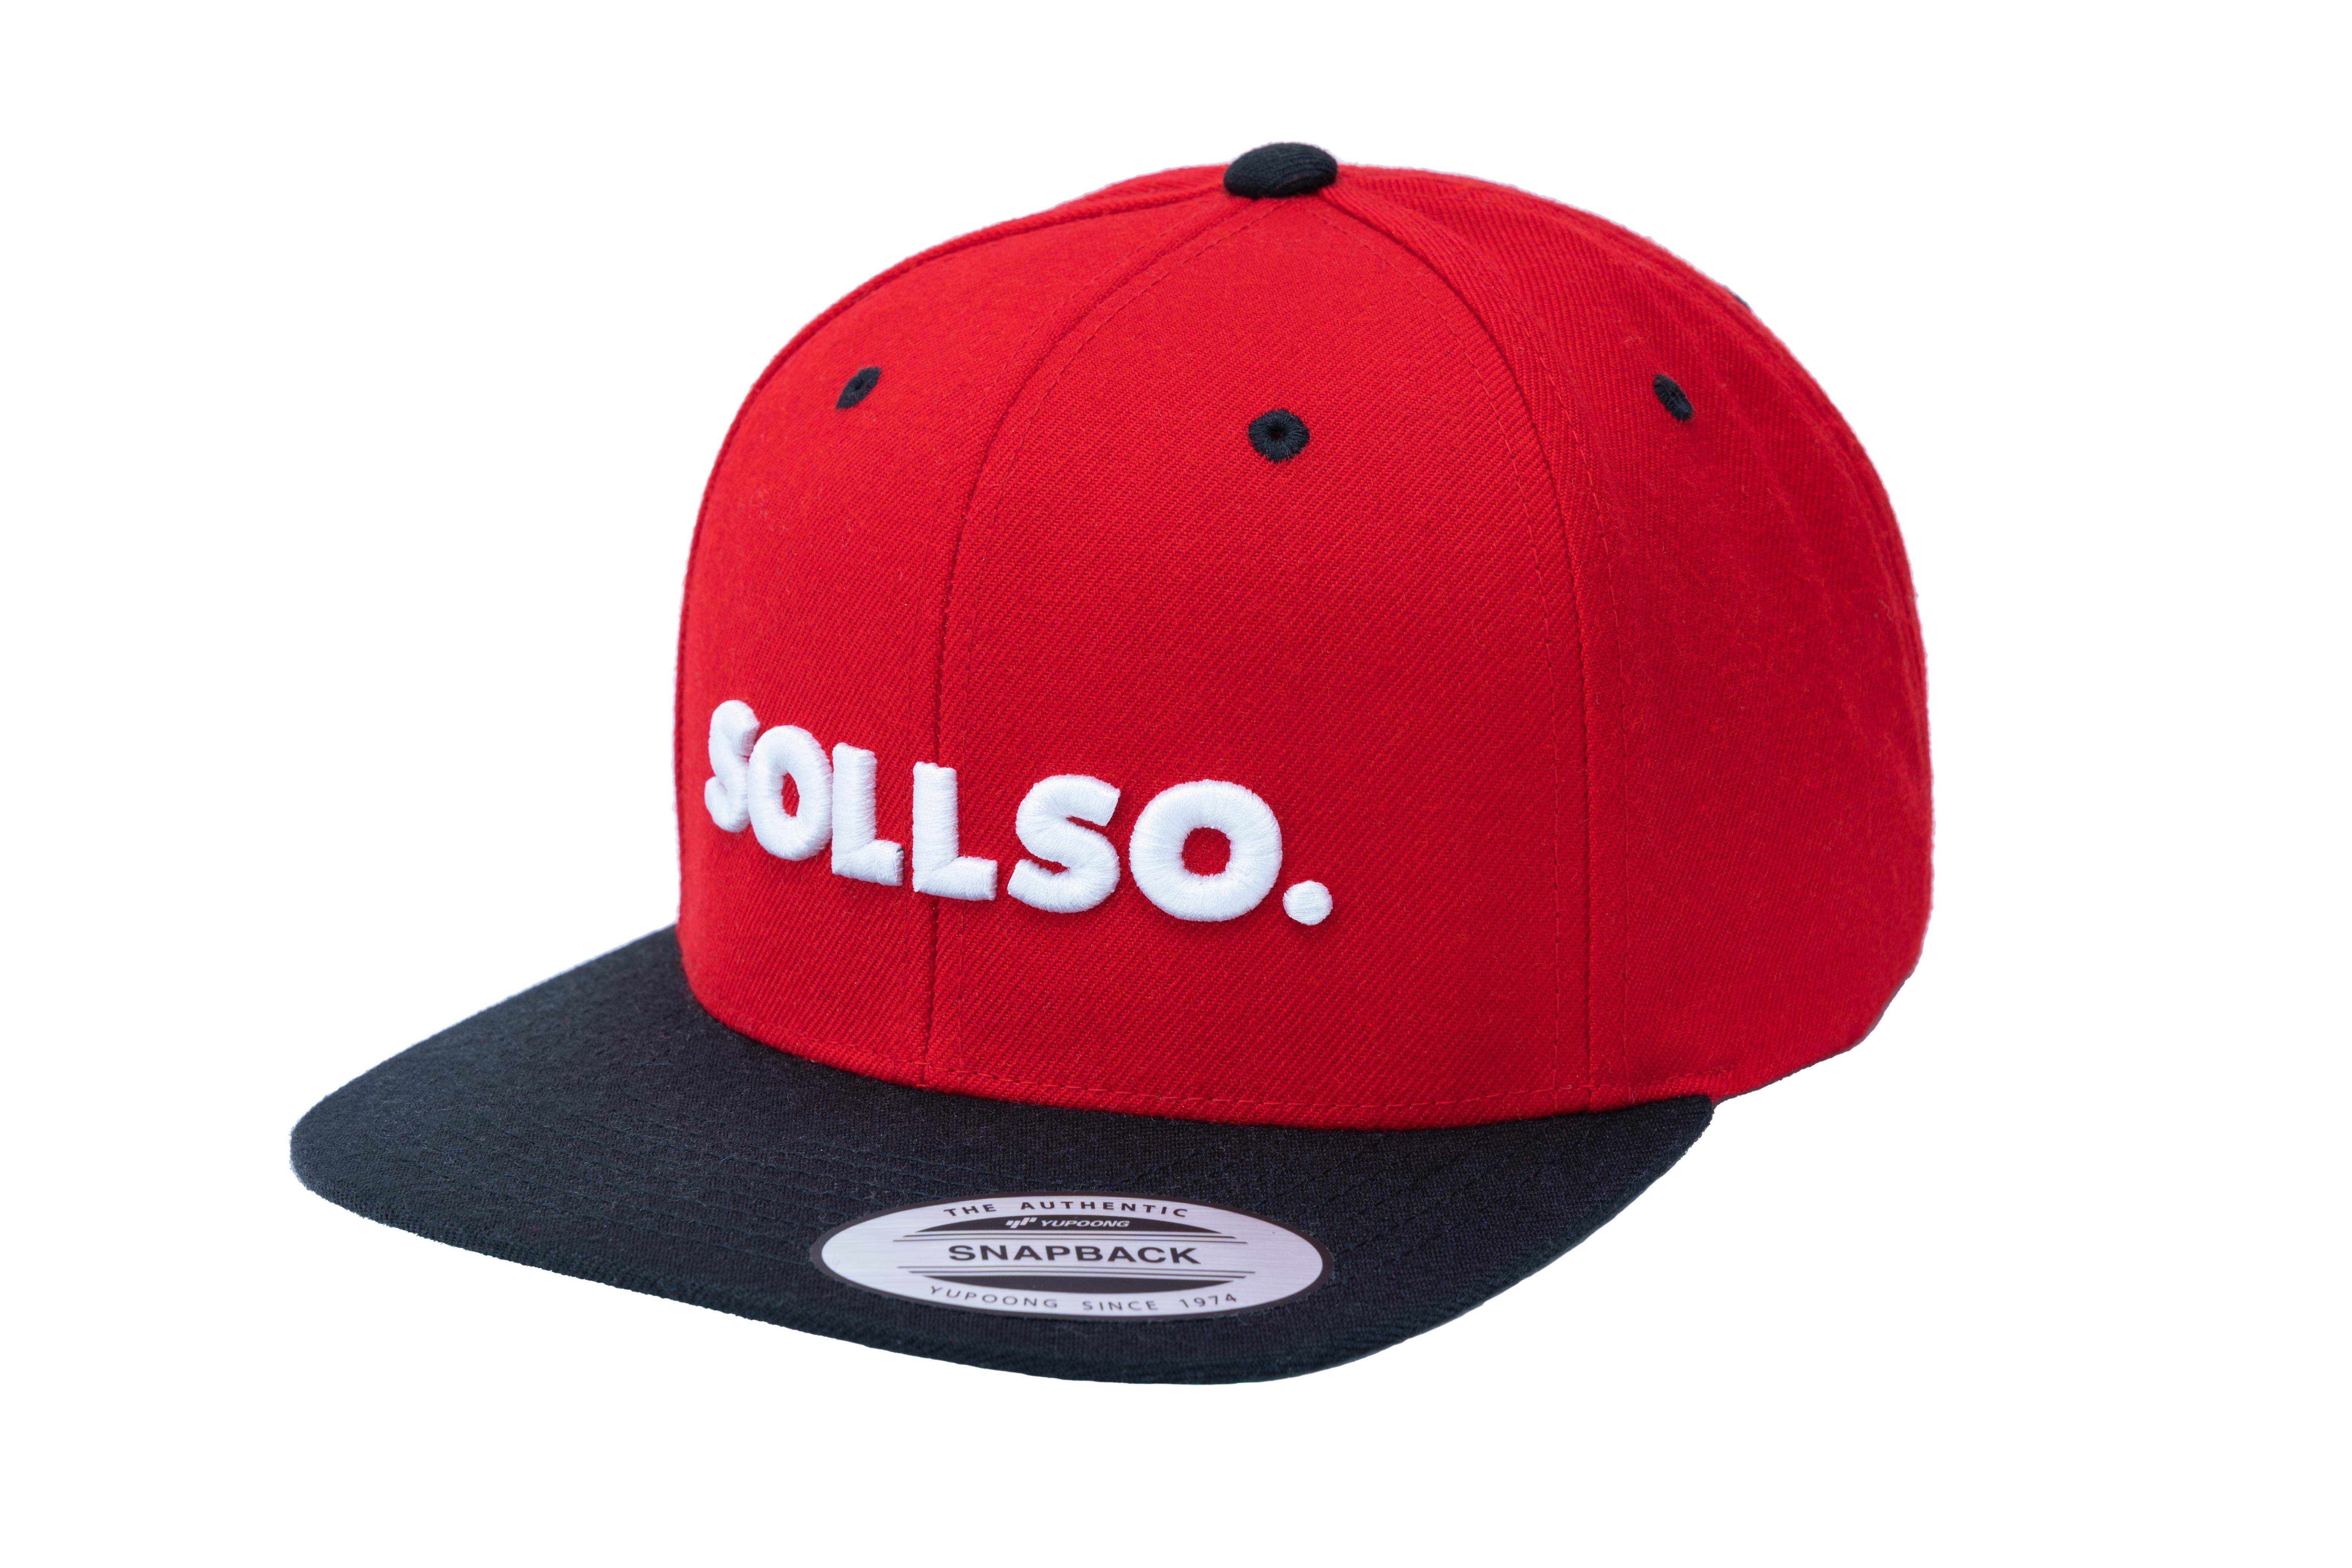 SOLLSO. Classic Snapback 2-Tone Cap, Red-Black